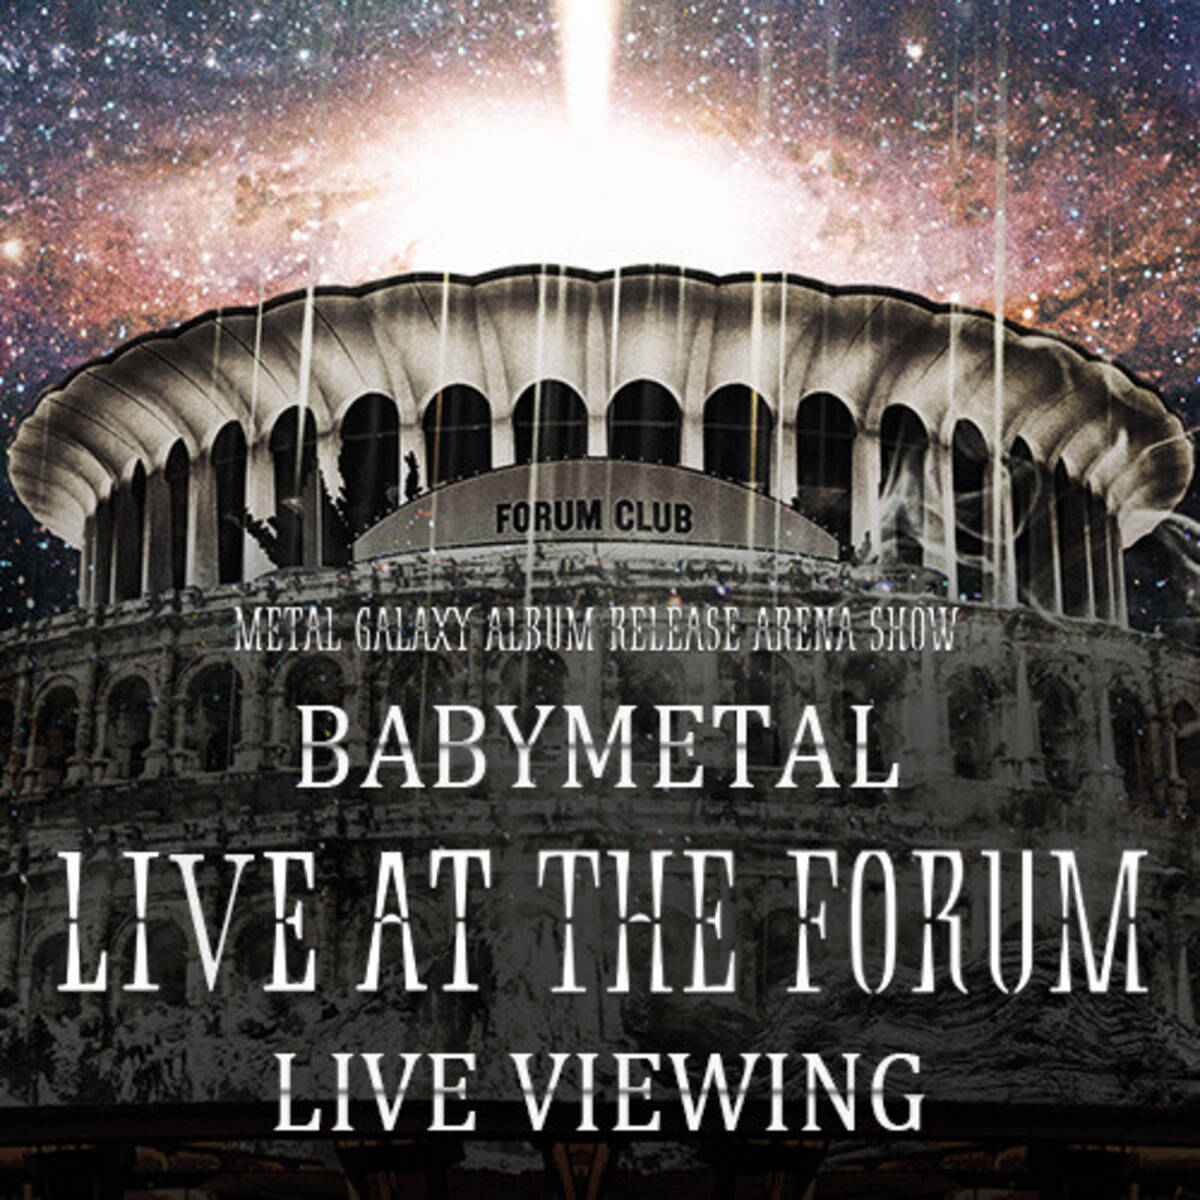 Babymetal Live At The Forum ライブ ビューイング実施決定 19年9月4日 エキサイトニュース